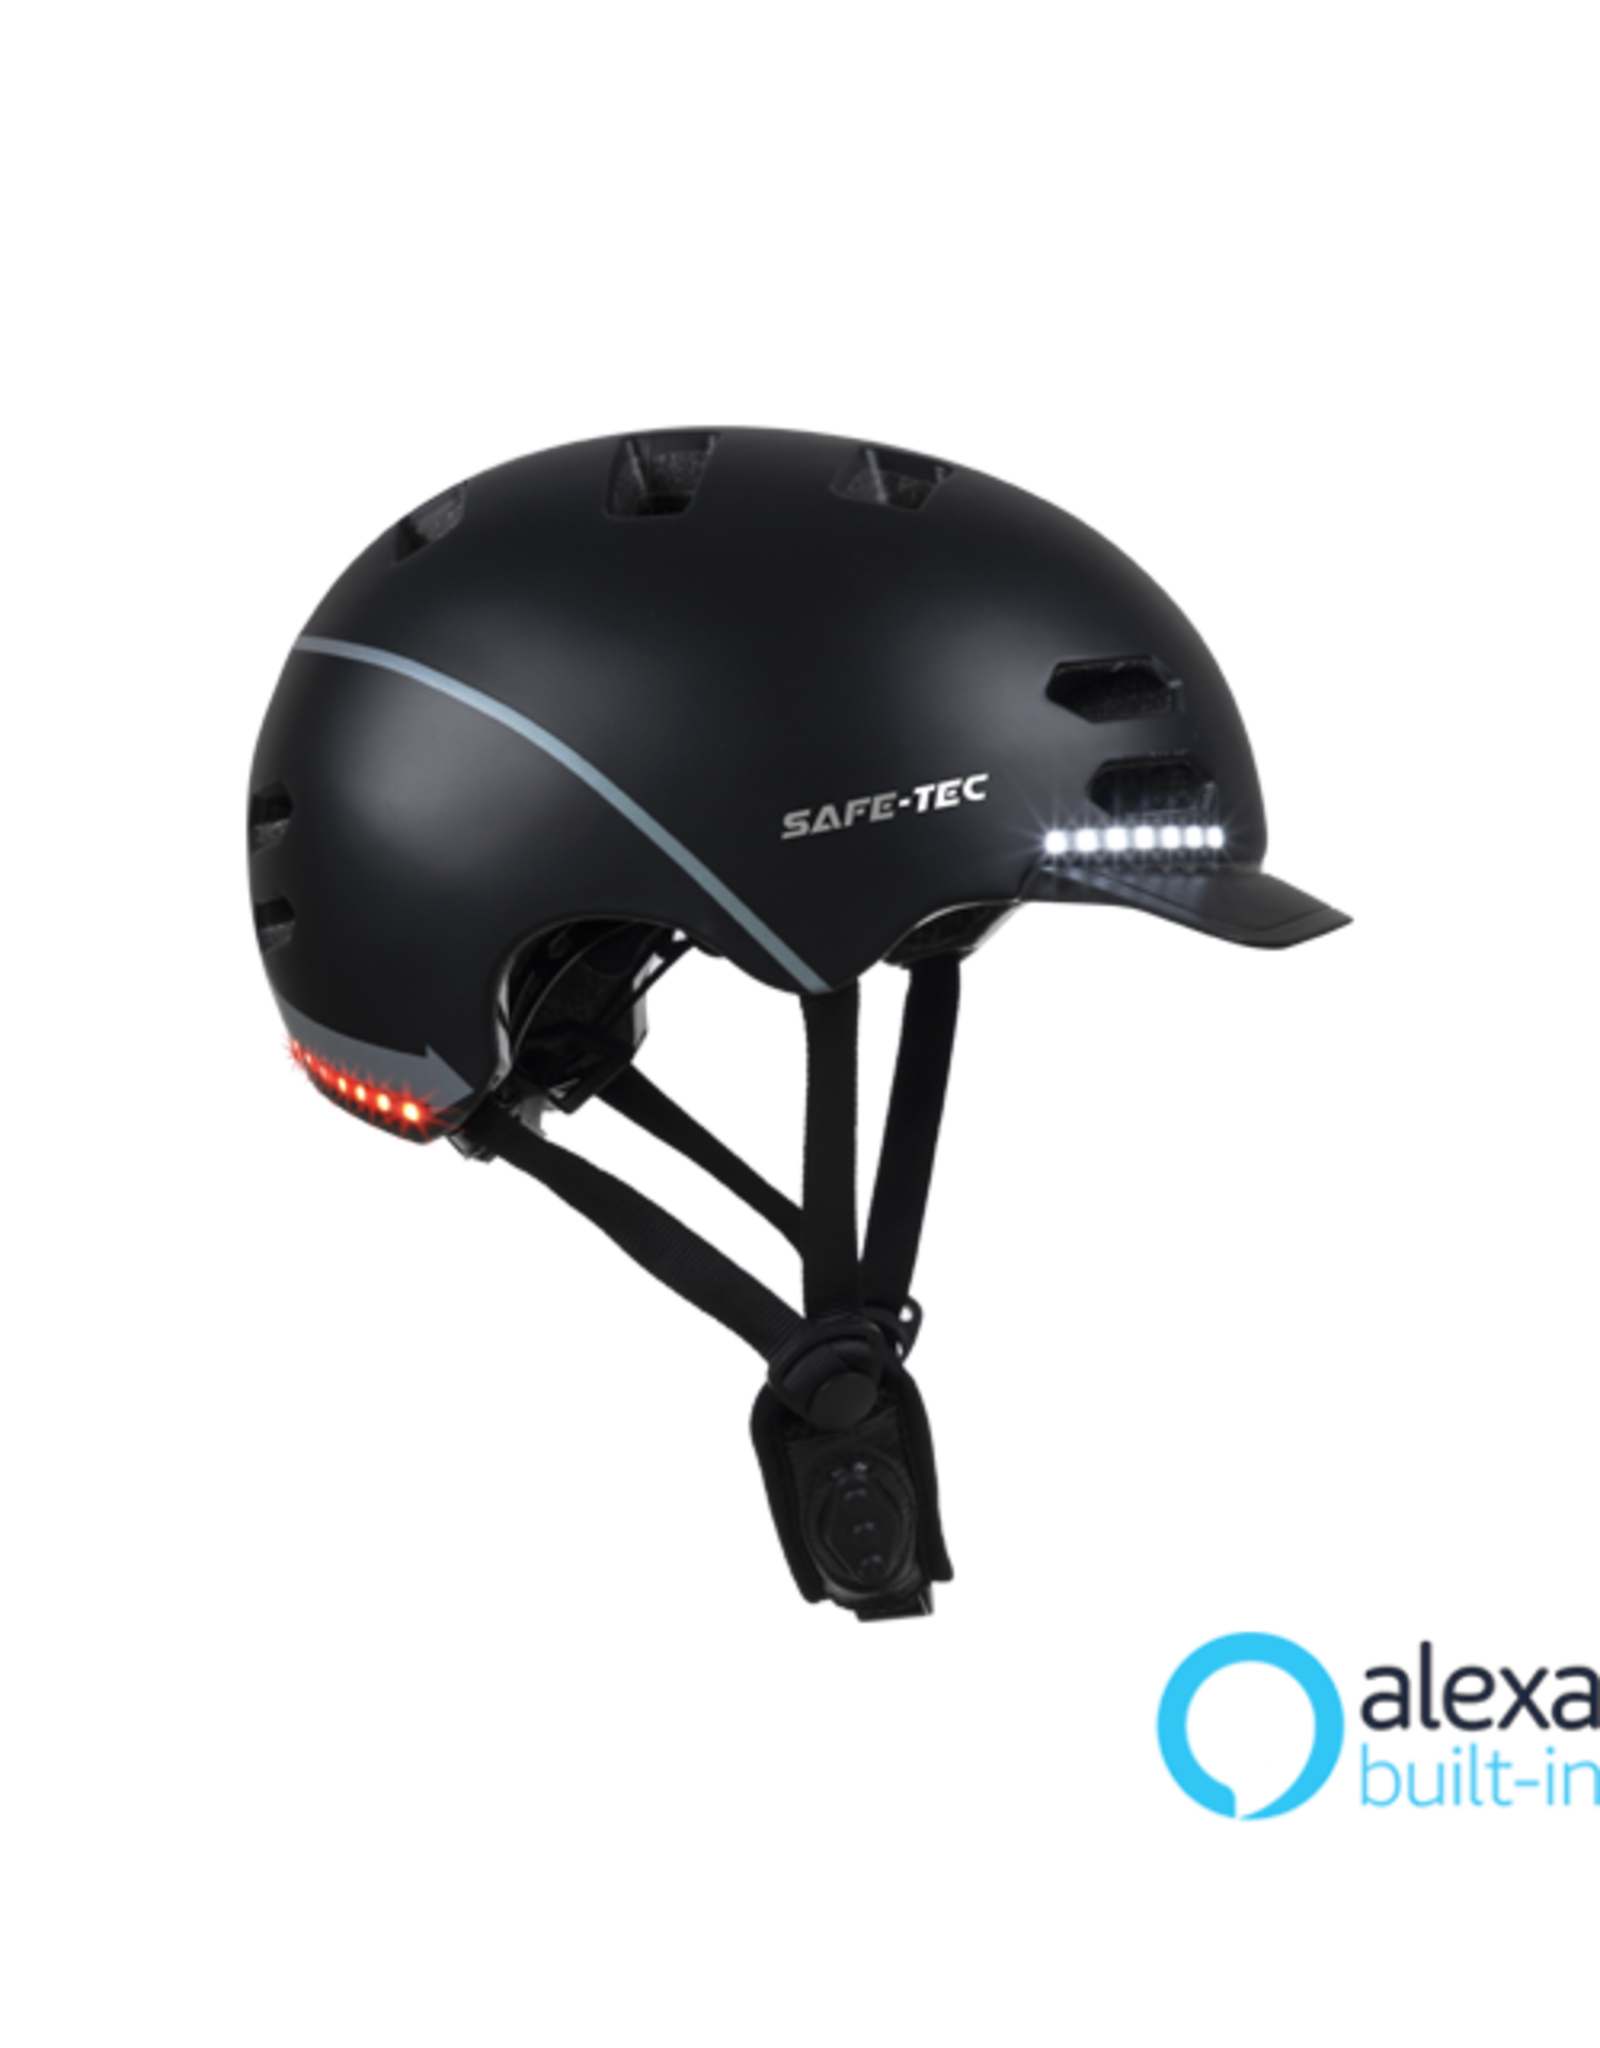 Helmet SAFE-TEC SK8-2 ebike w/ Turn Signal